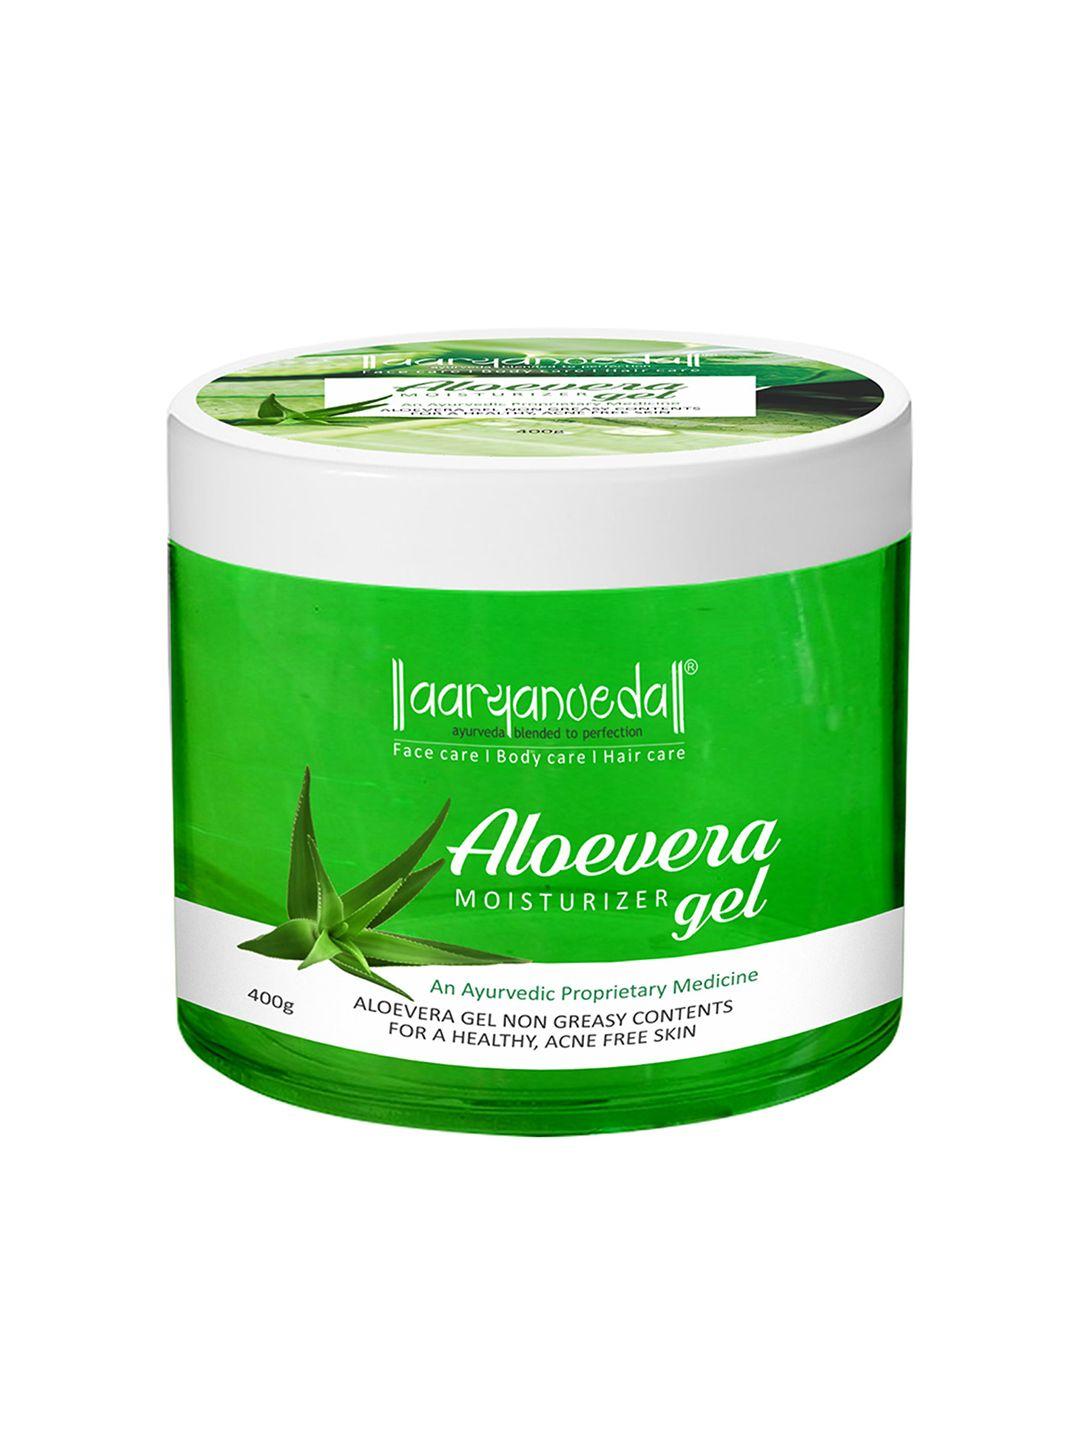 aryanveda aloevera moisturizer face & body gel for skin hydration & healthy scalp - 400 g